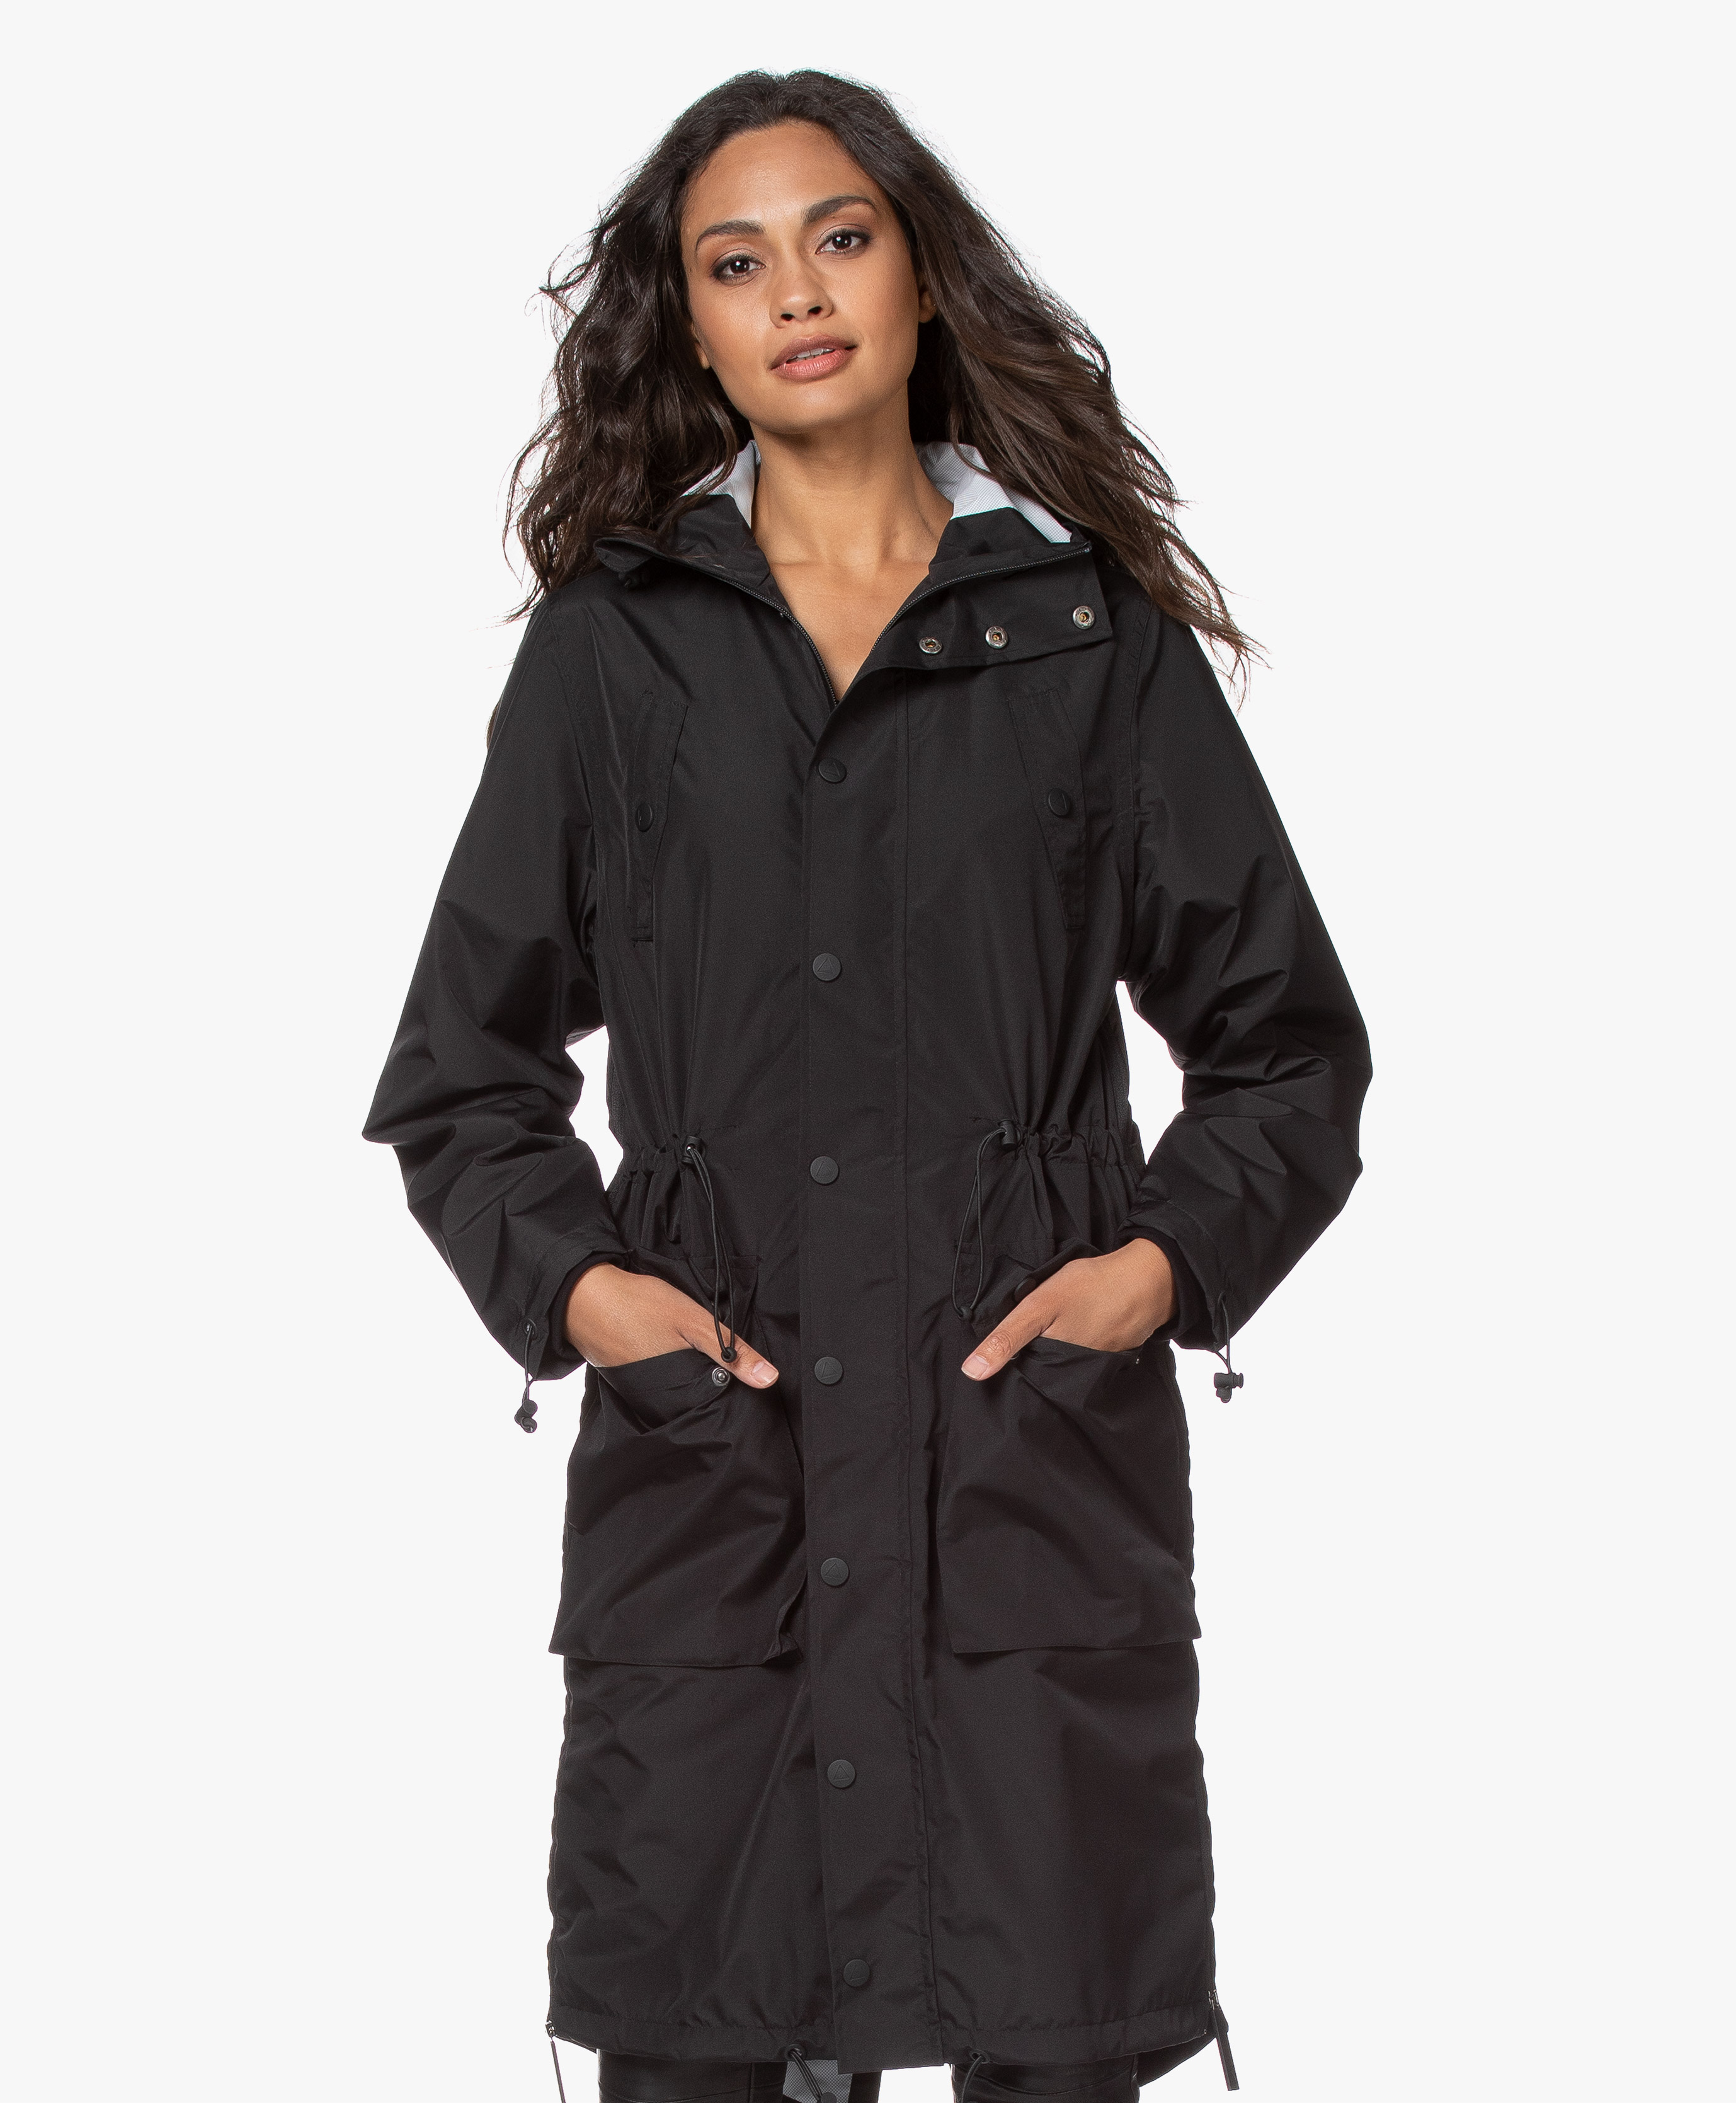 Maium Rainwear 2-in-1 Parka Lightweight Raincoat - Matt Black - maium ...